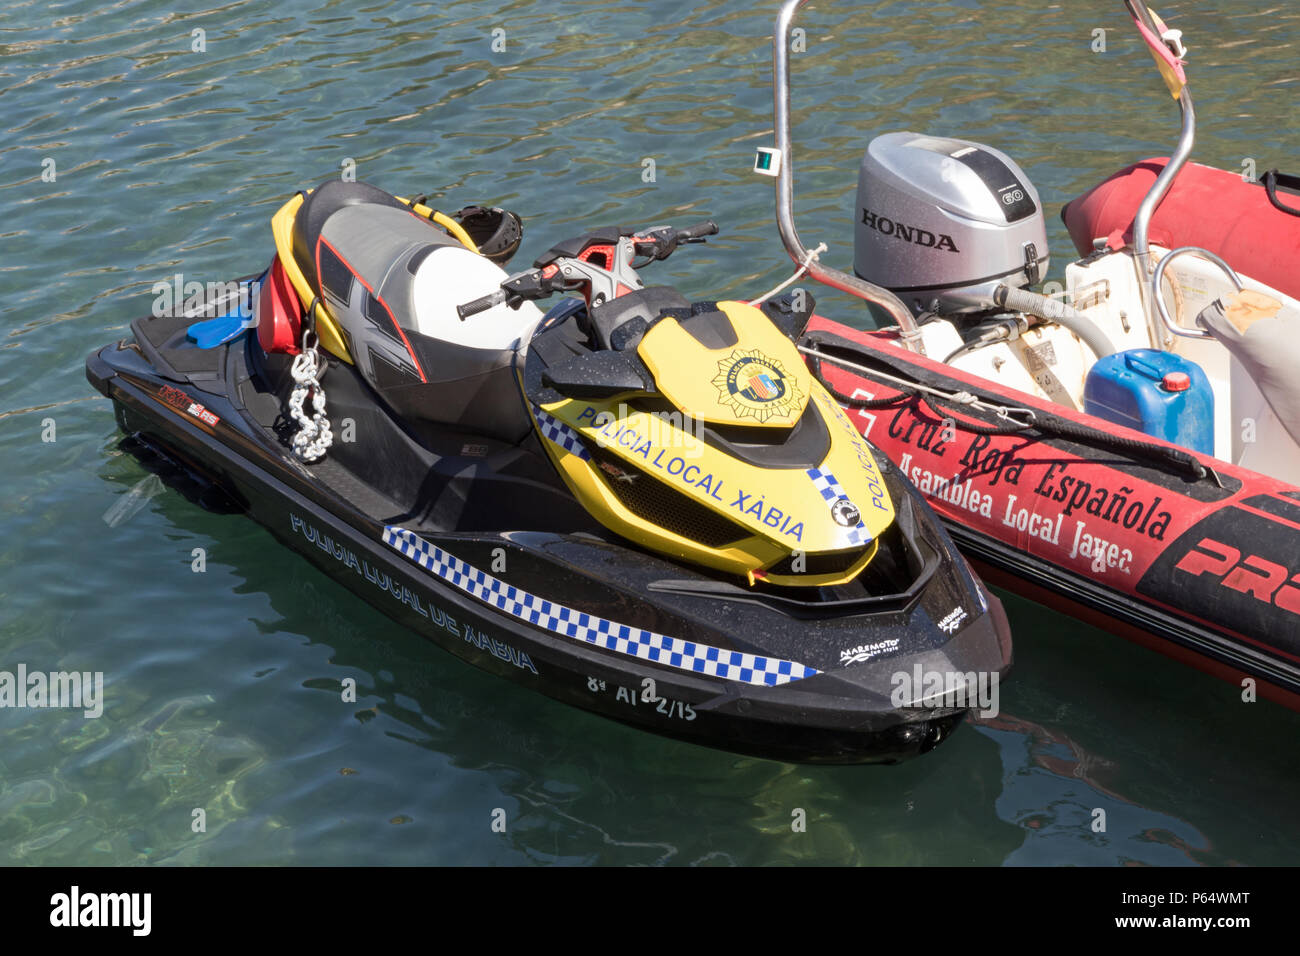 Local police water ski jet moored at Playa La Granadella Javea Stock Photo